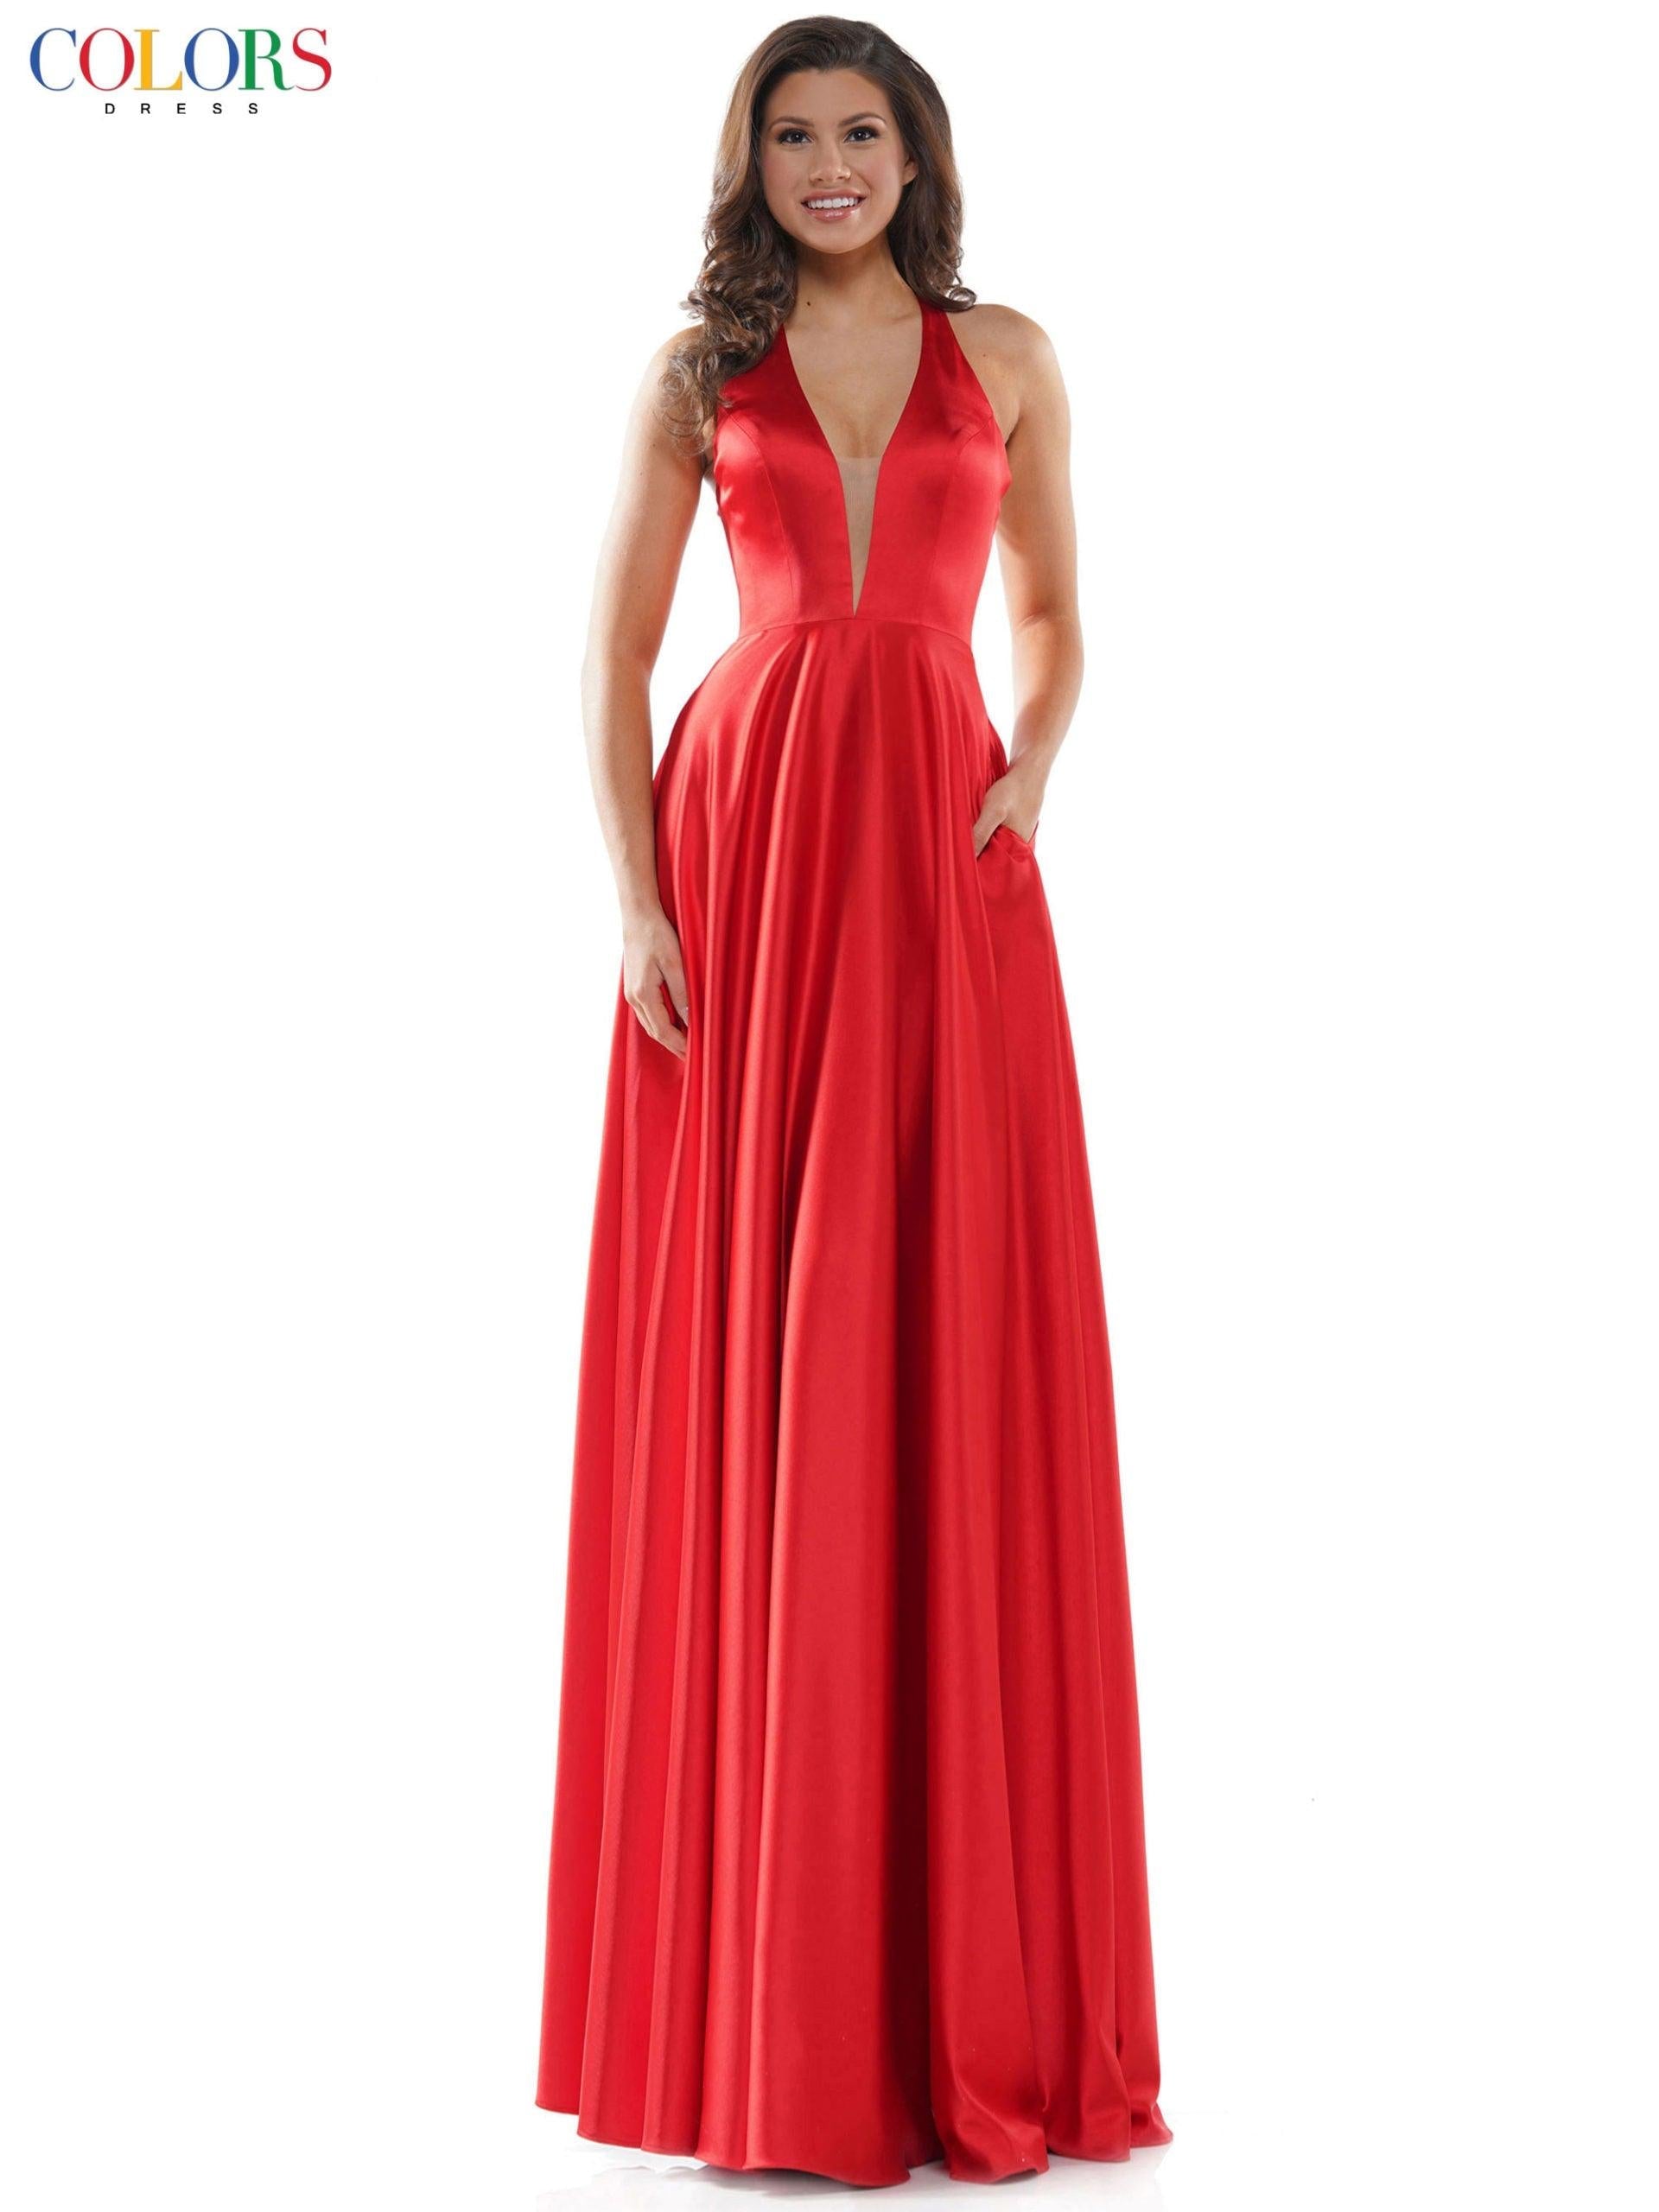 Colors Long Halter Formal Prom Dress 2633 - The Dress Outlet